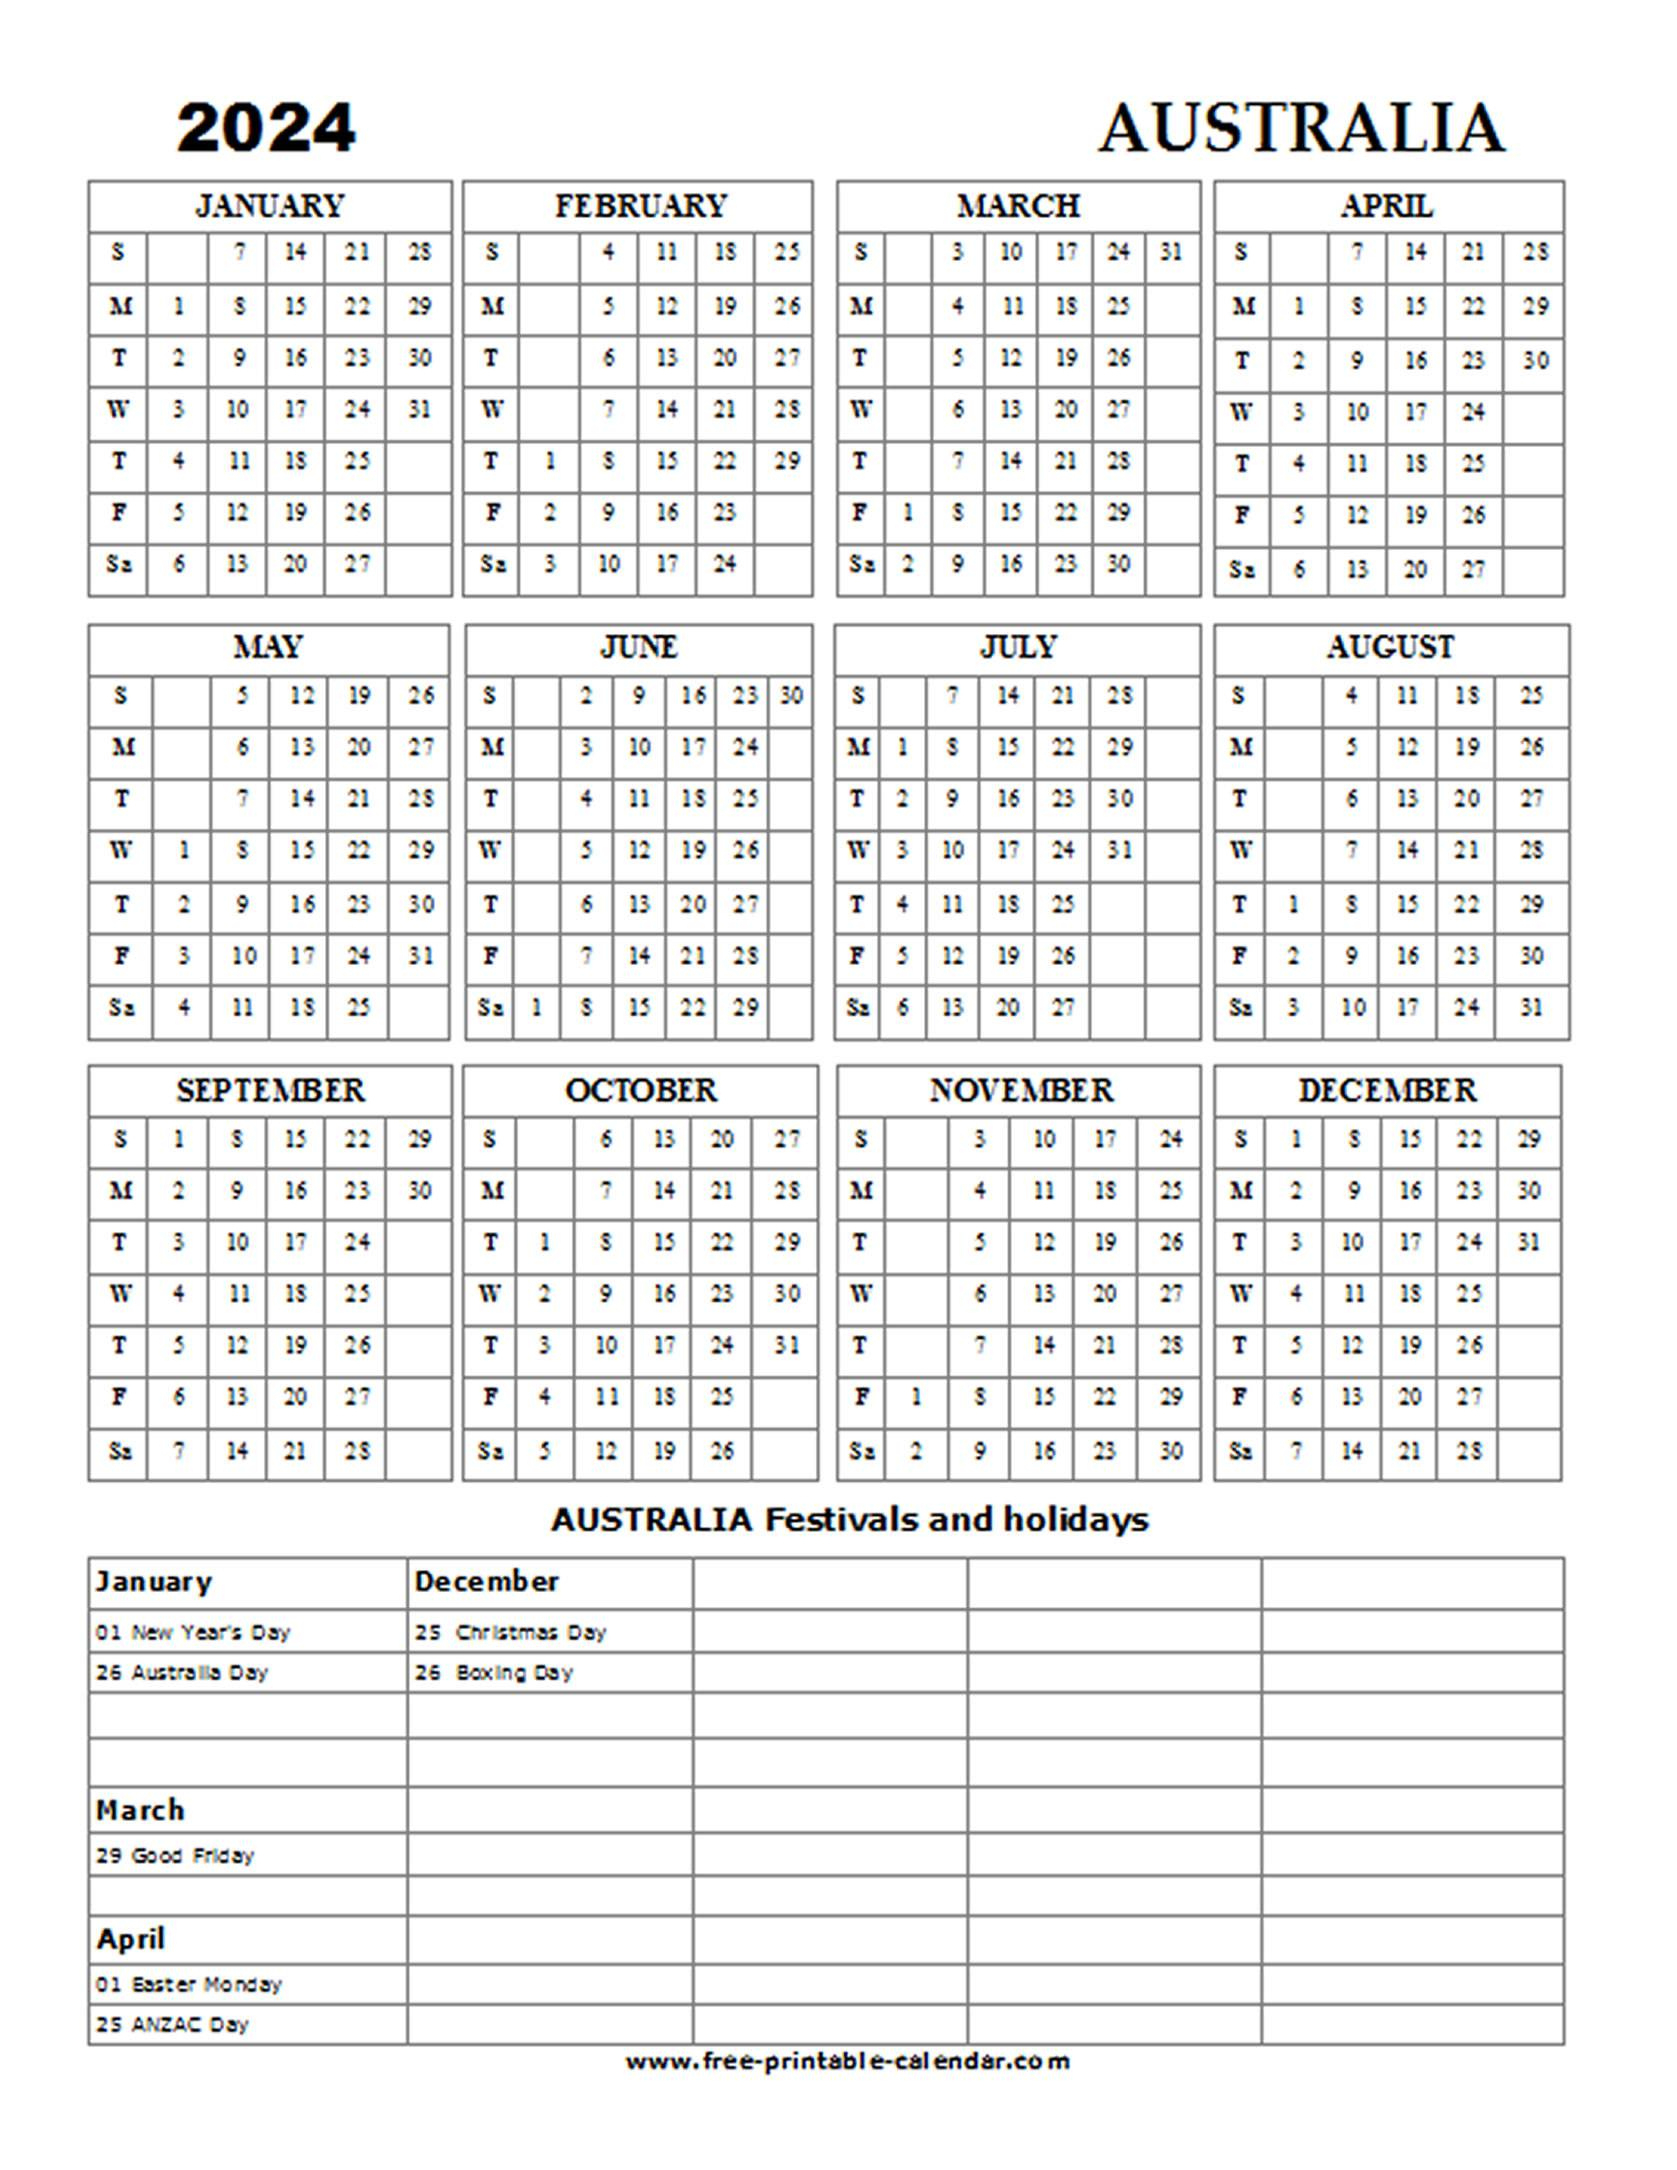 2024 Australia Holiday Calendar - Free-Printable-Calendar | Free Printable Calendar 2024 Australia